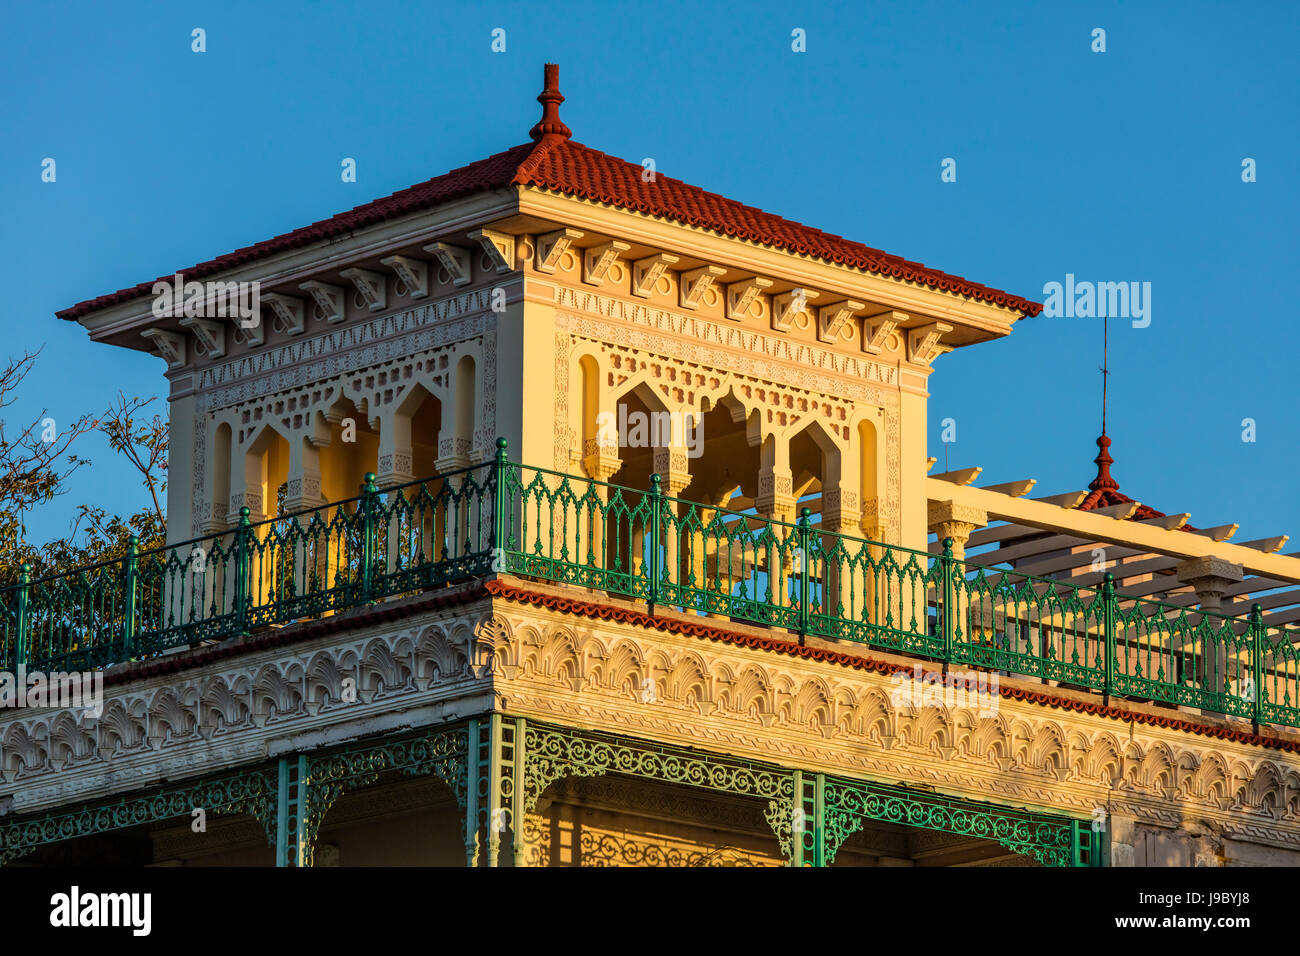 The PALACIO DE VALLE is a beautiful example of Moorish architecture near the end of the PUNTA GORDA peninsula - CIENFUEGOS, CUBA Stock Photo